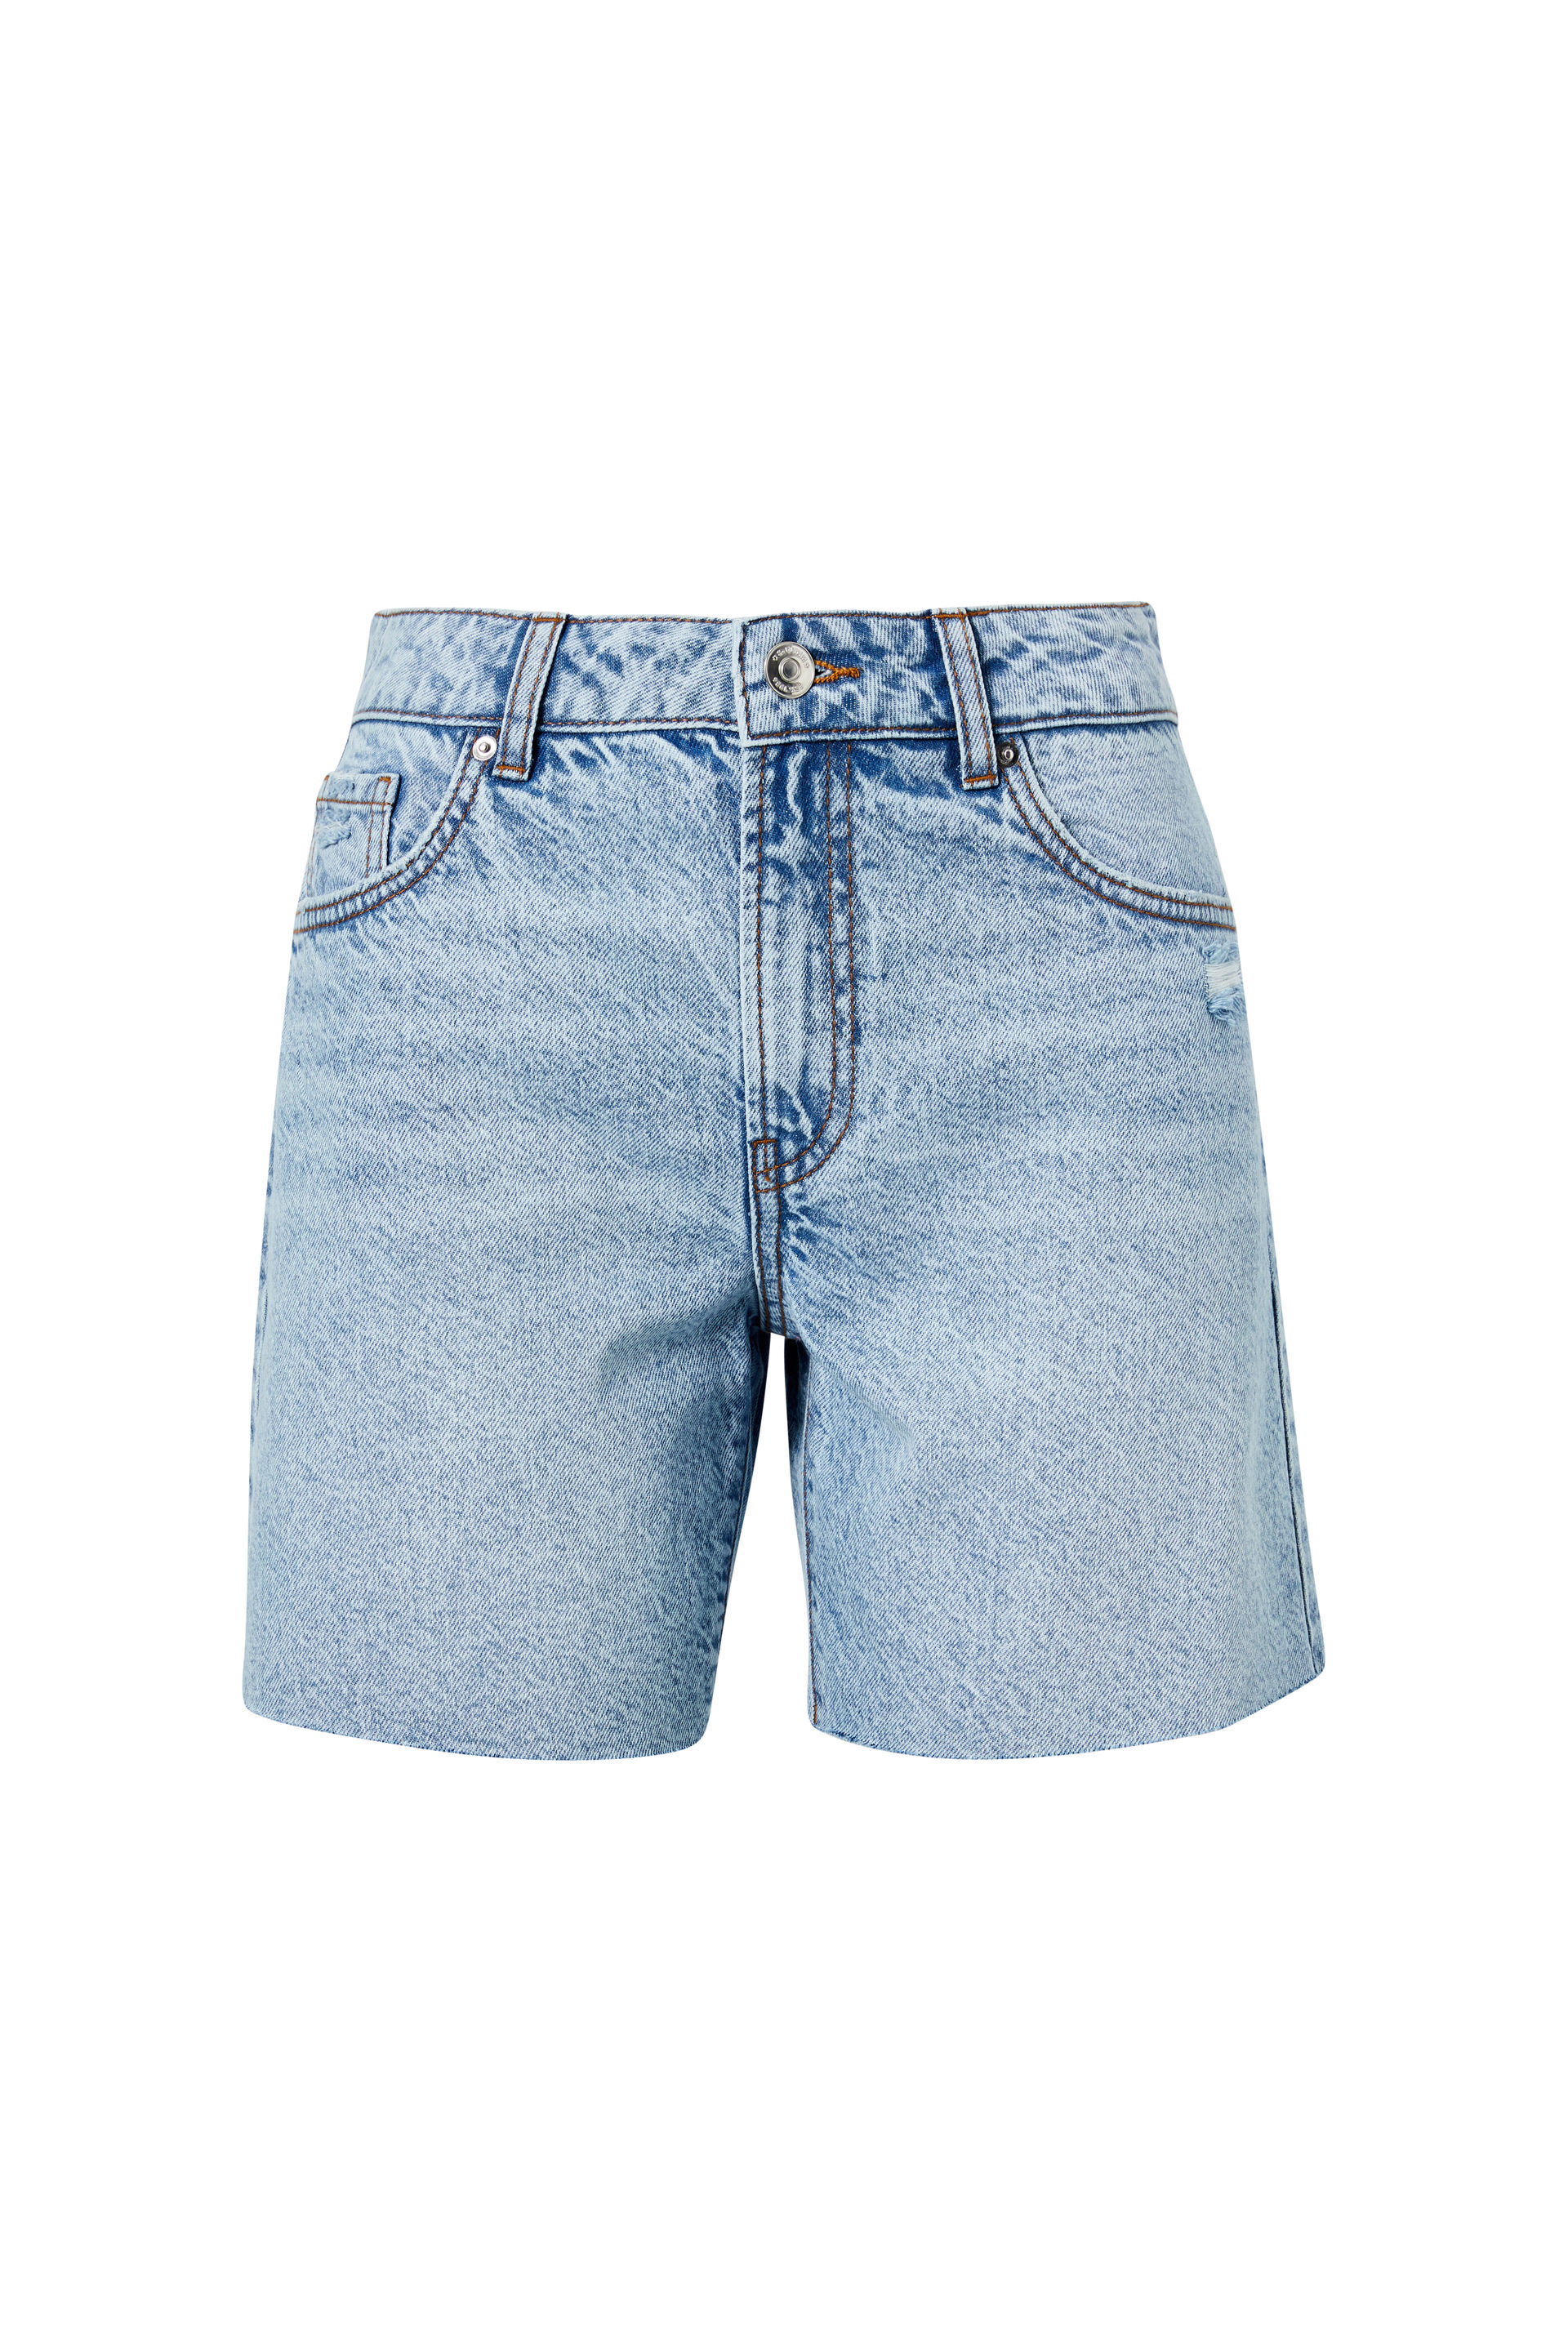 Levis 505 Made in USA Medium Wash Cutoff Denim Shorts 34”